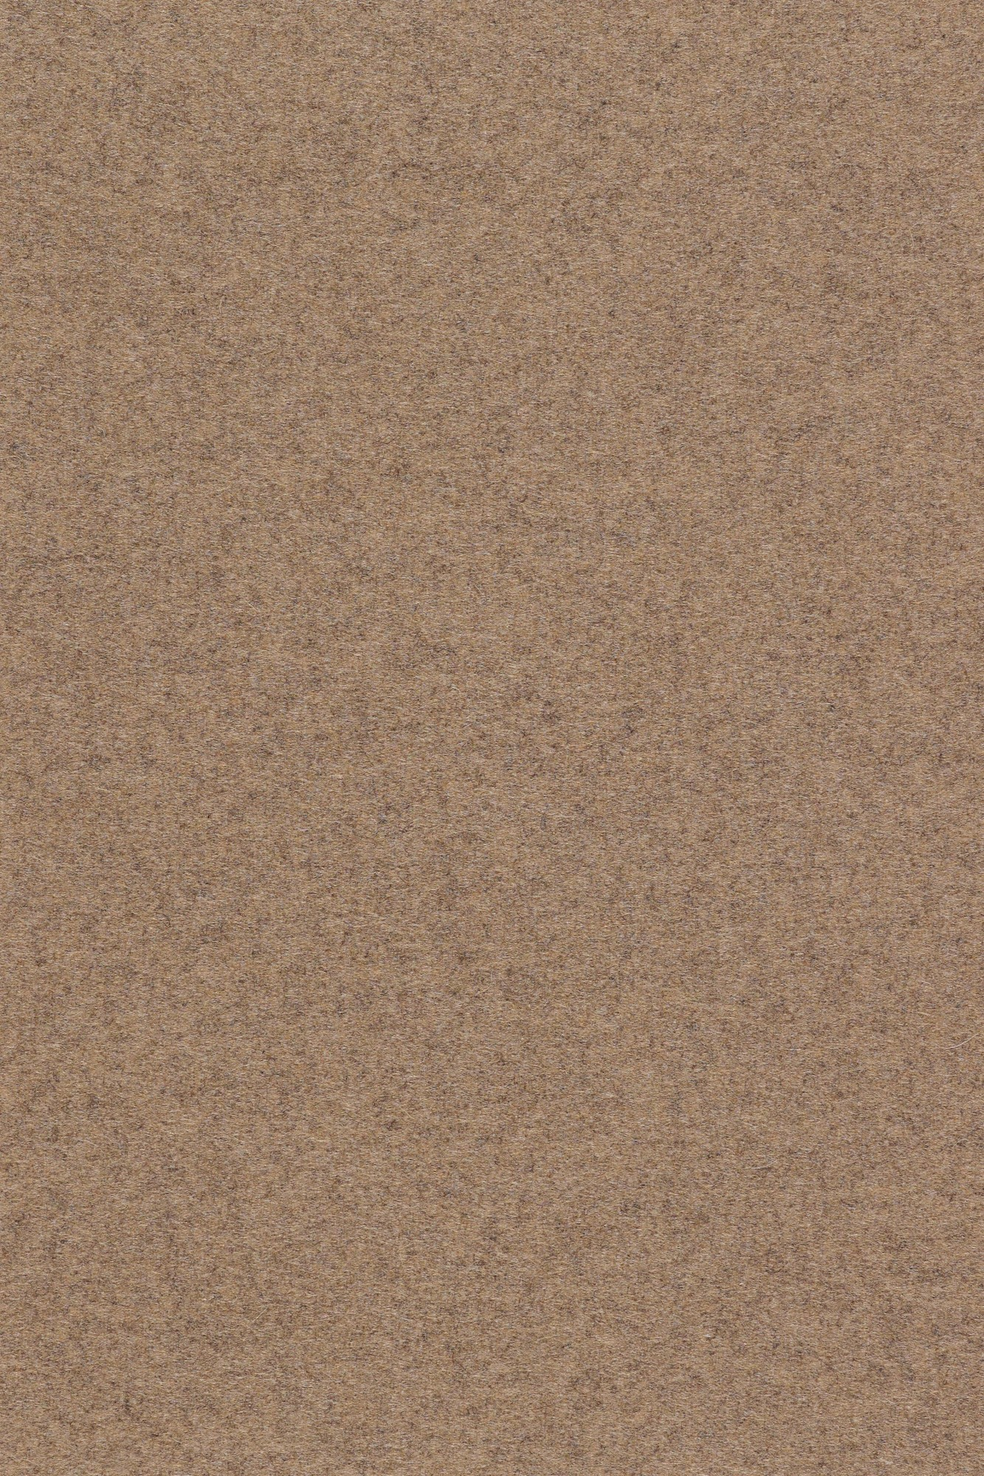 Fabric sample Divina MD 453 brown